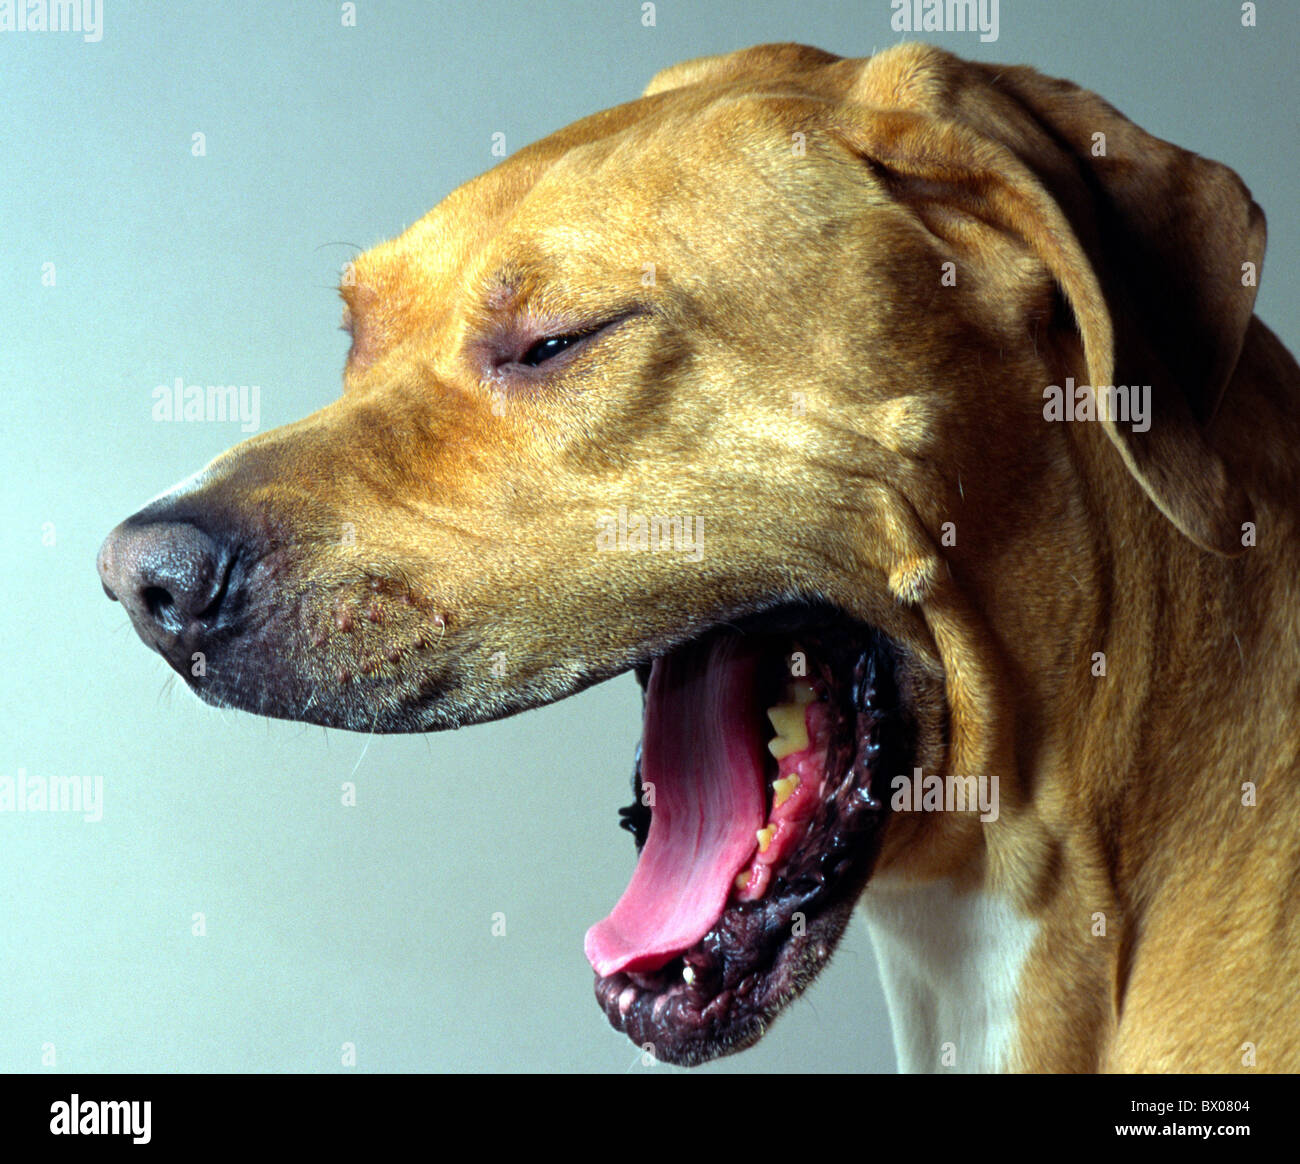 yawn face Fila Brasileiro dog tiredly nature portrait animal beast Stock Photo